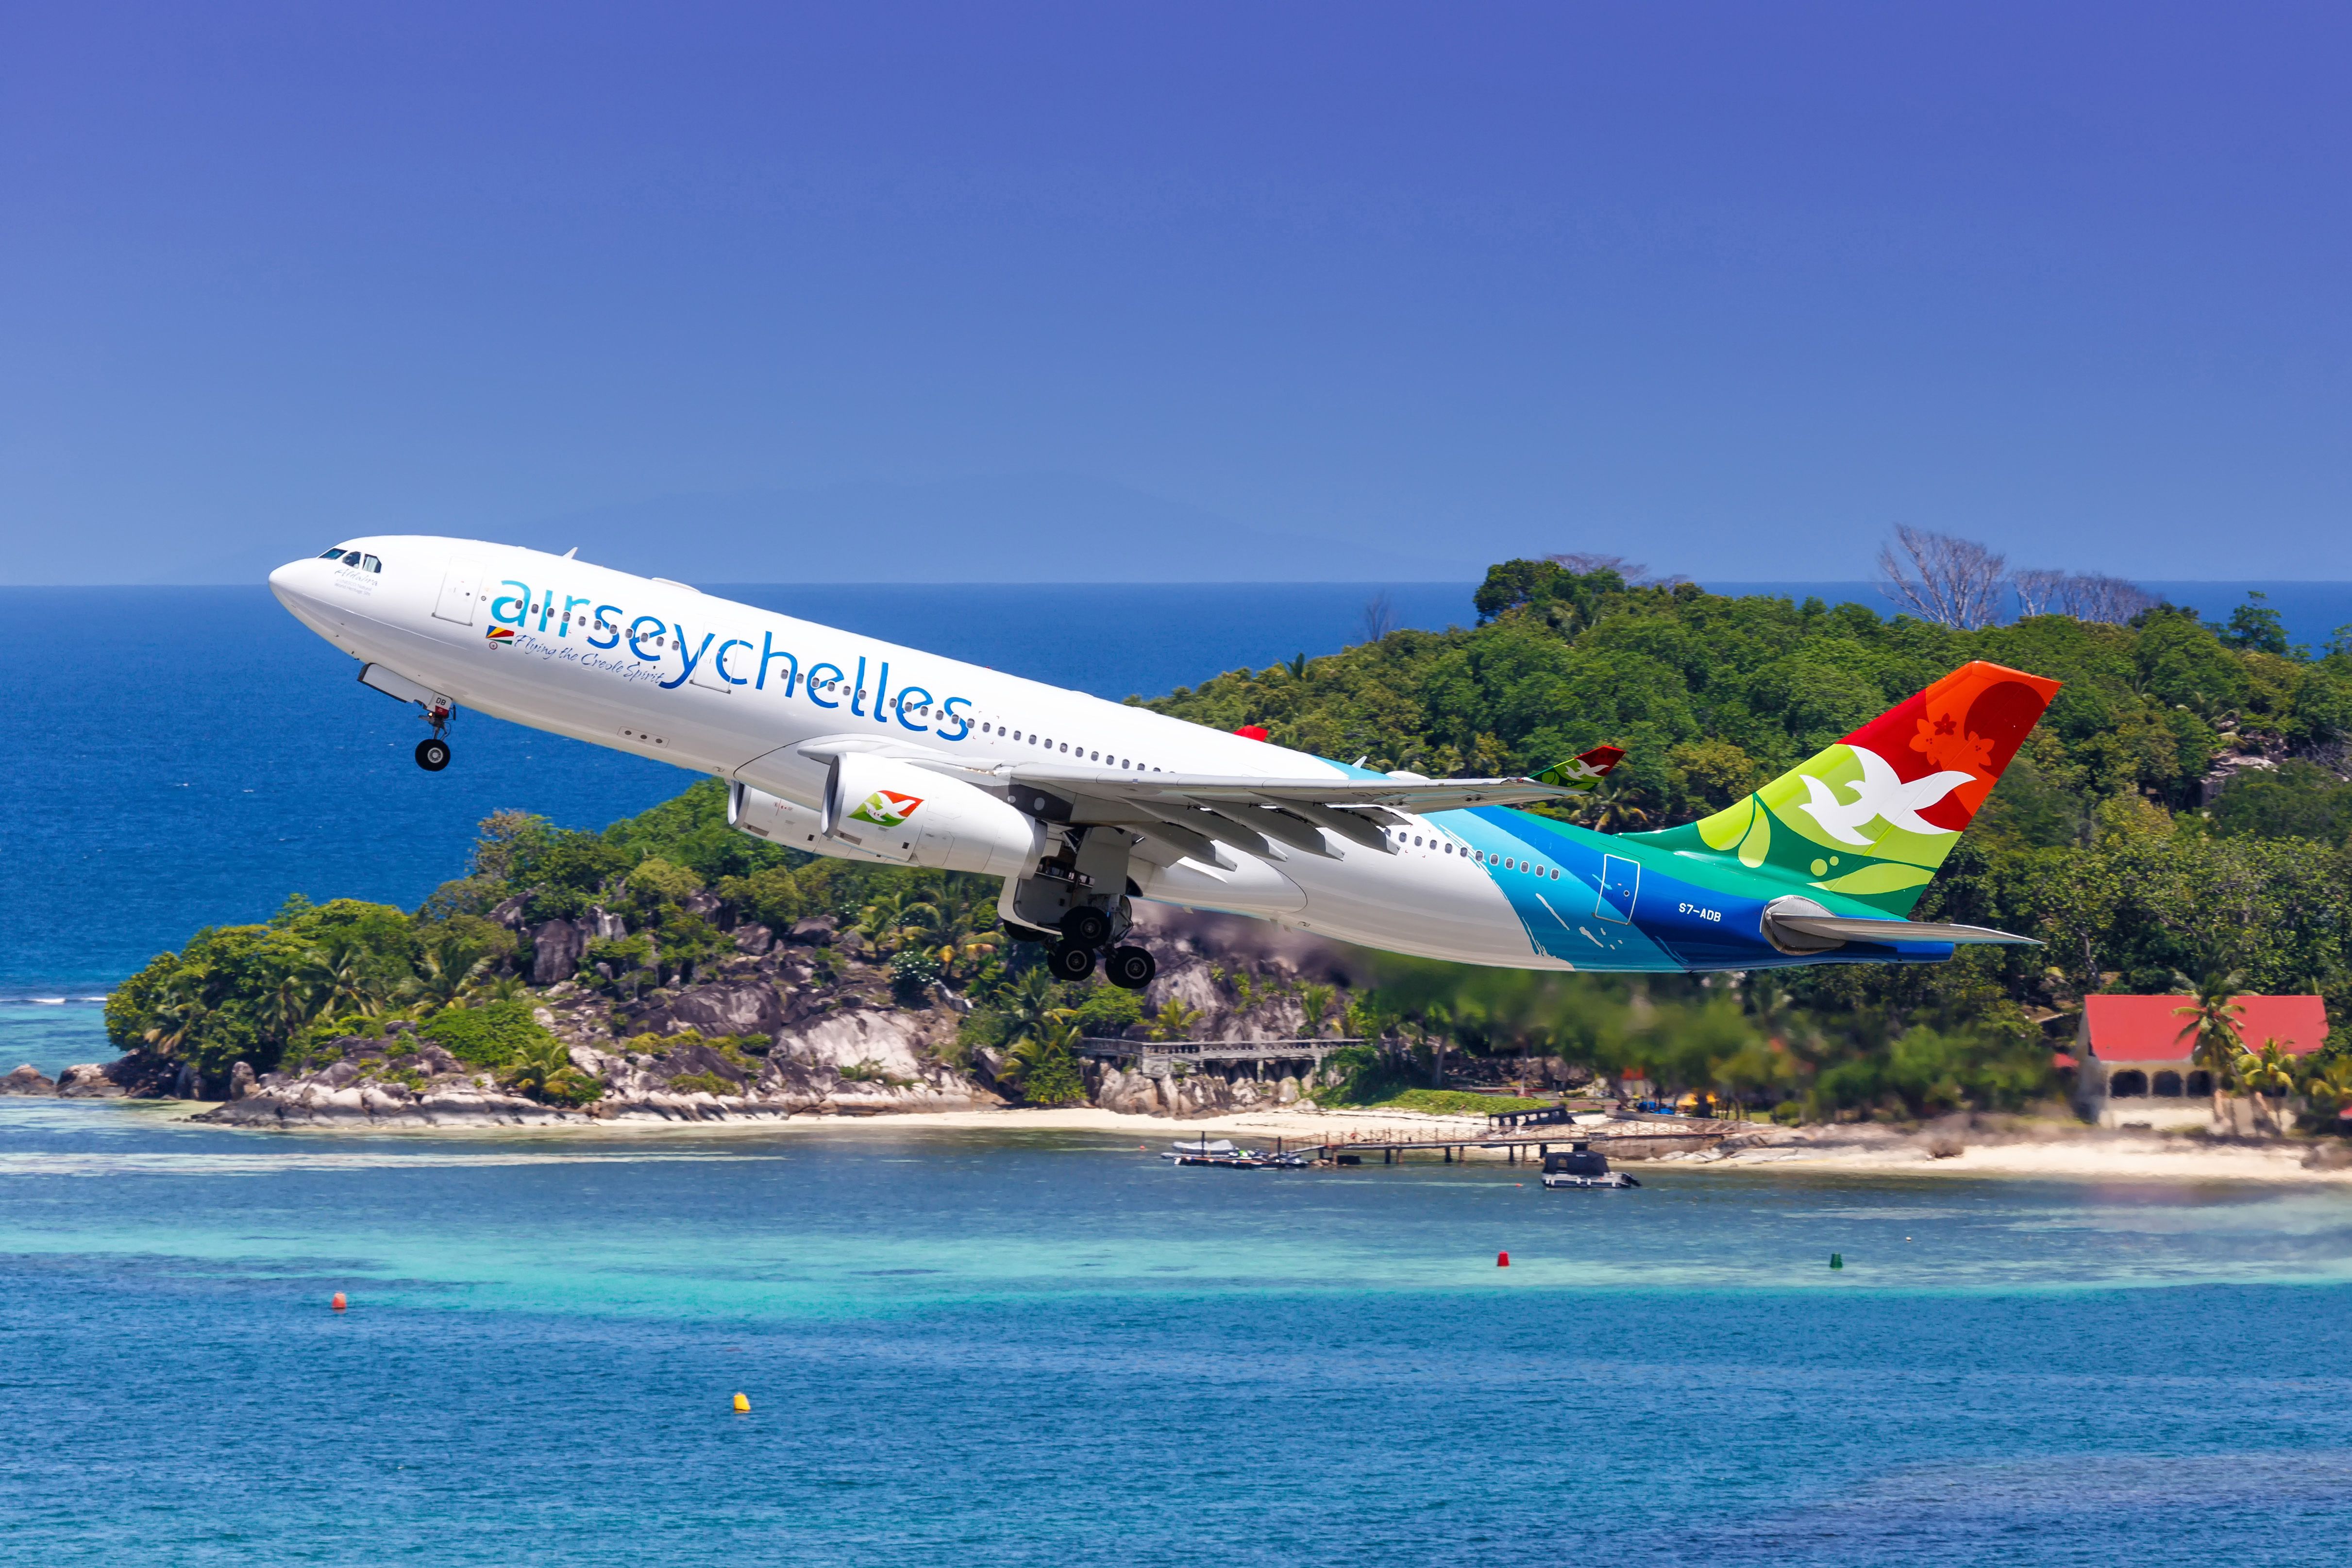 Air Seychelles A330 taking off